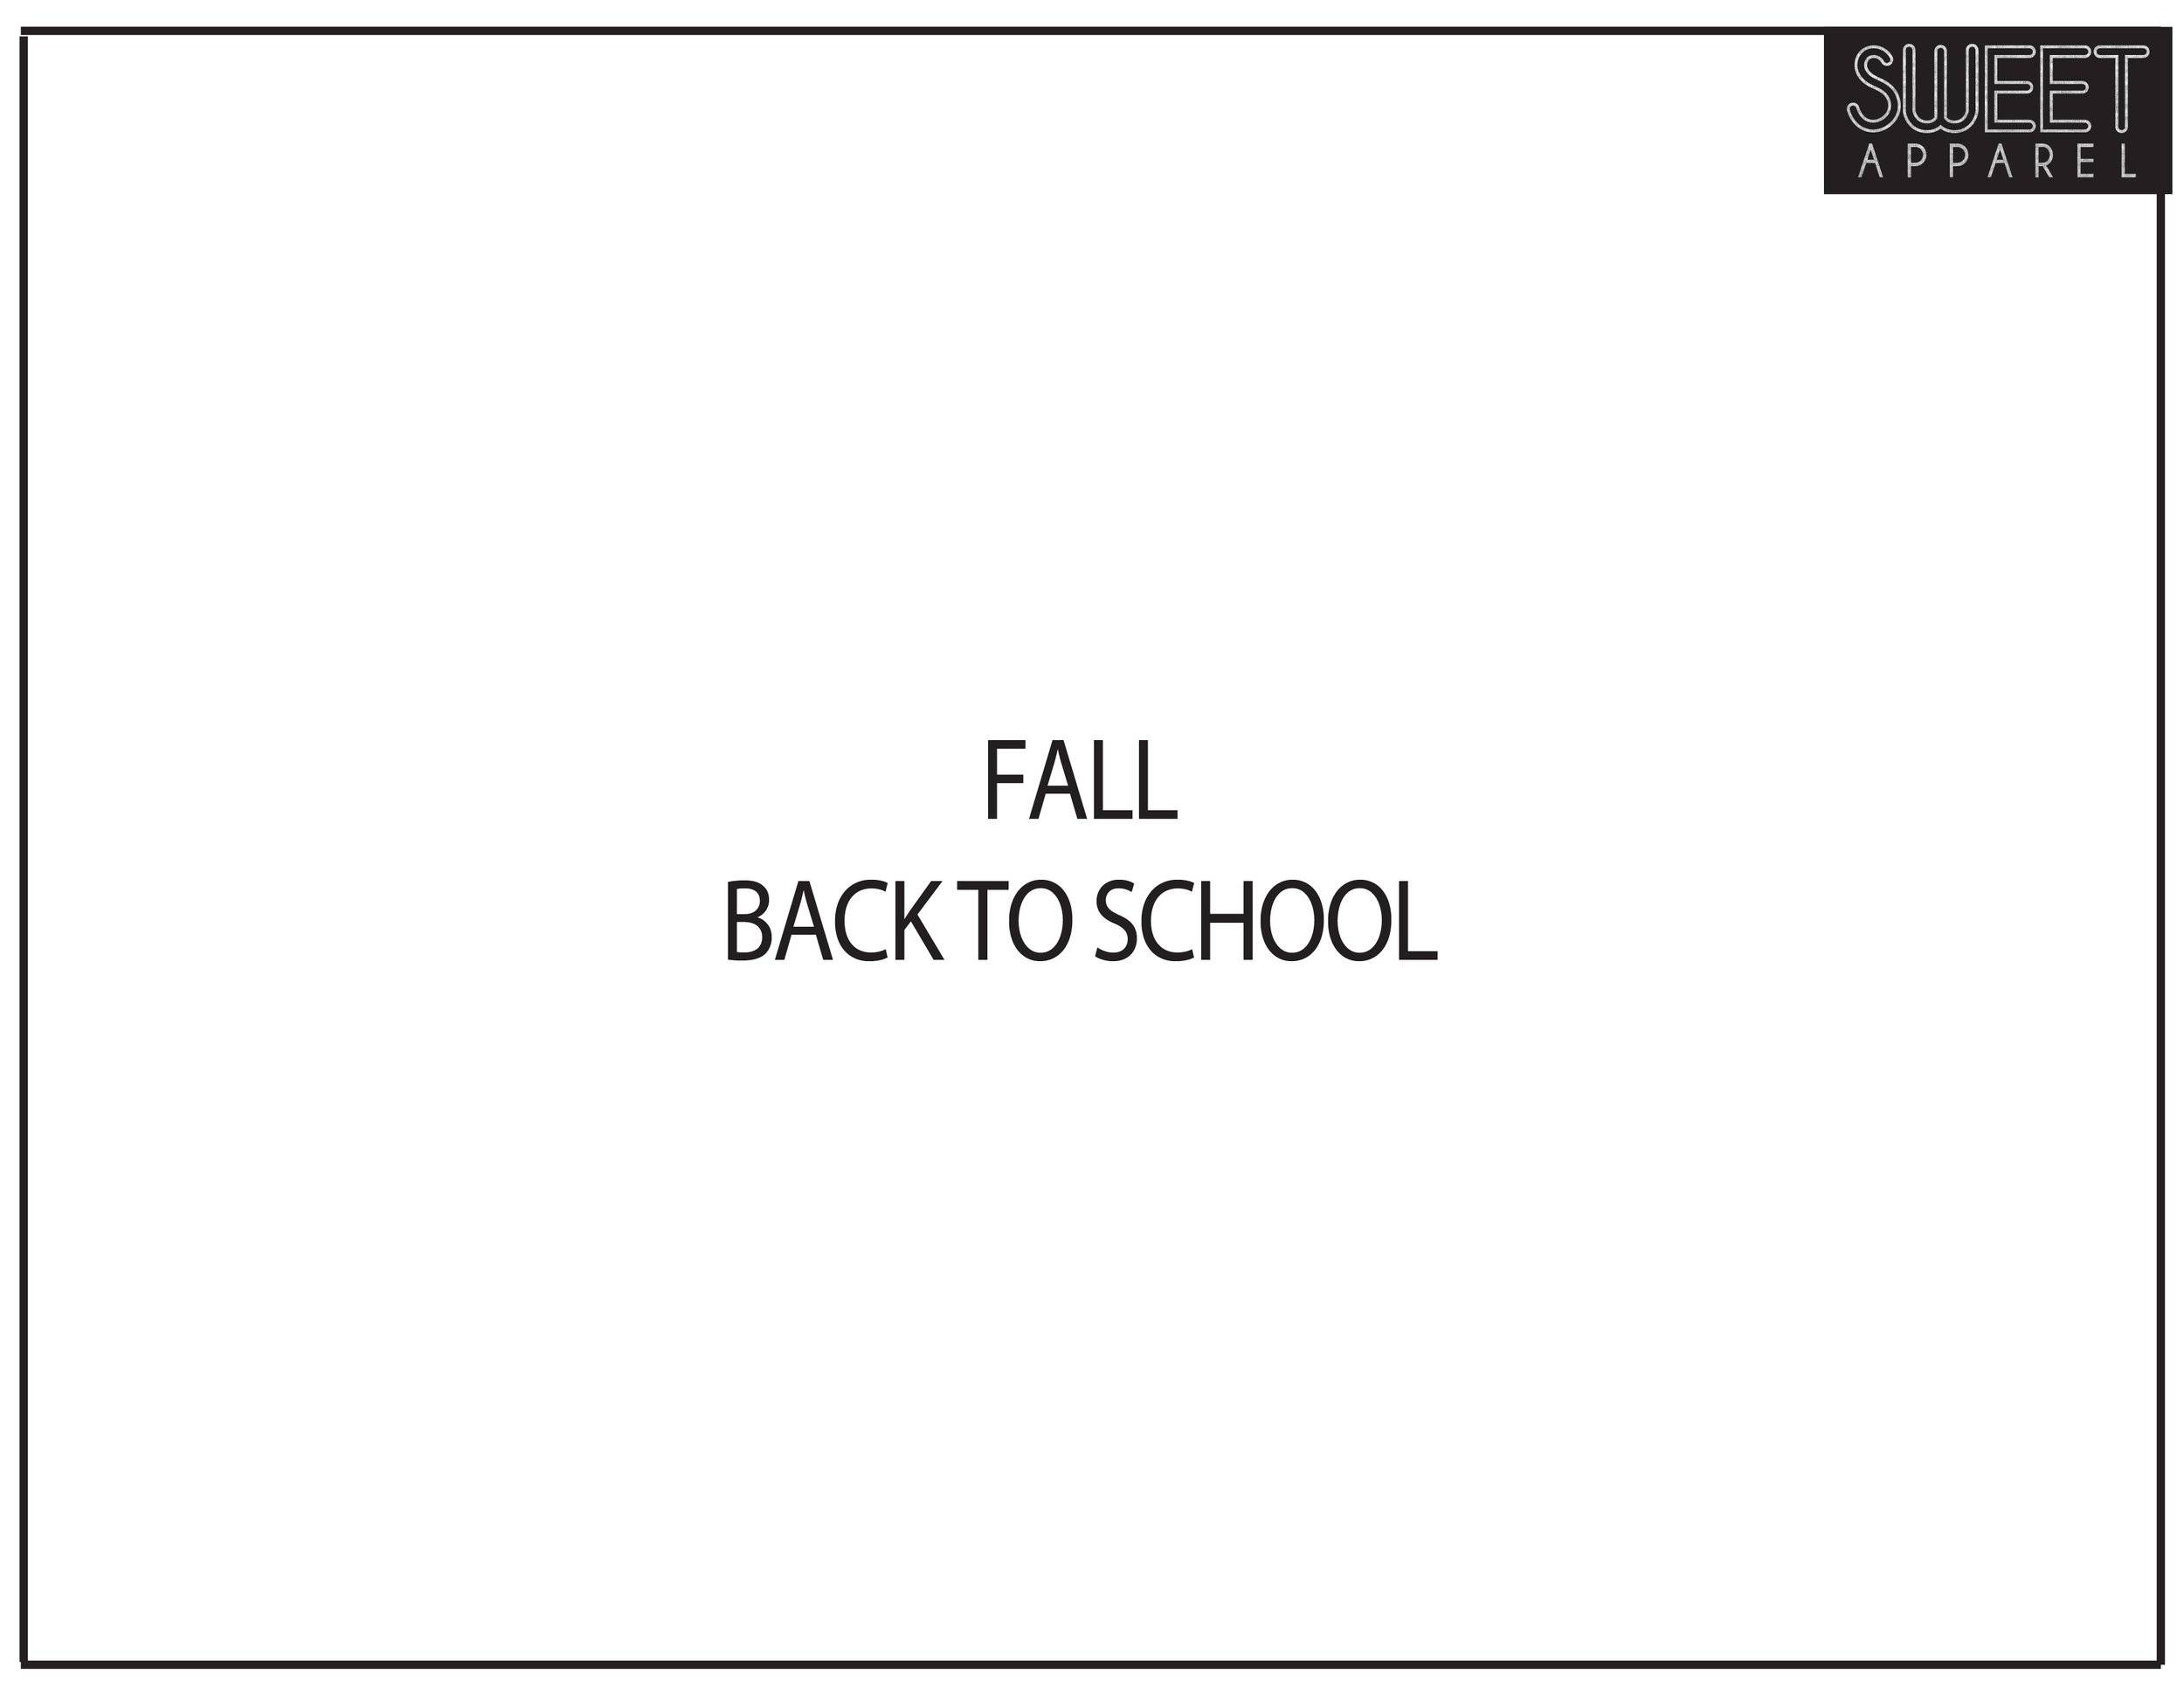 fall_backtoschool_title-01.jpg